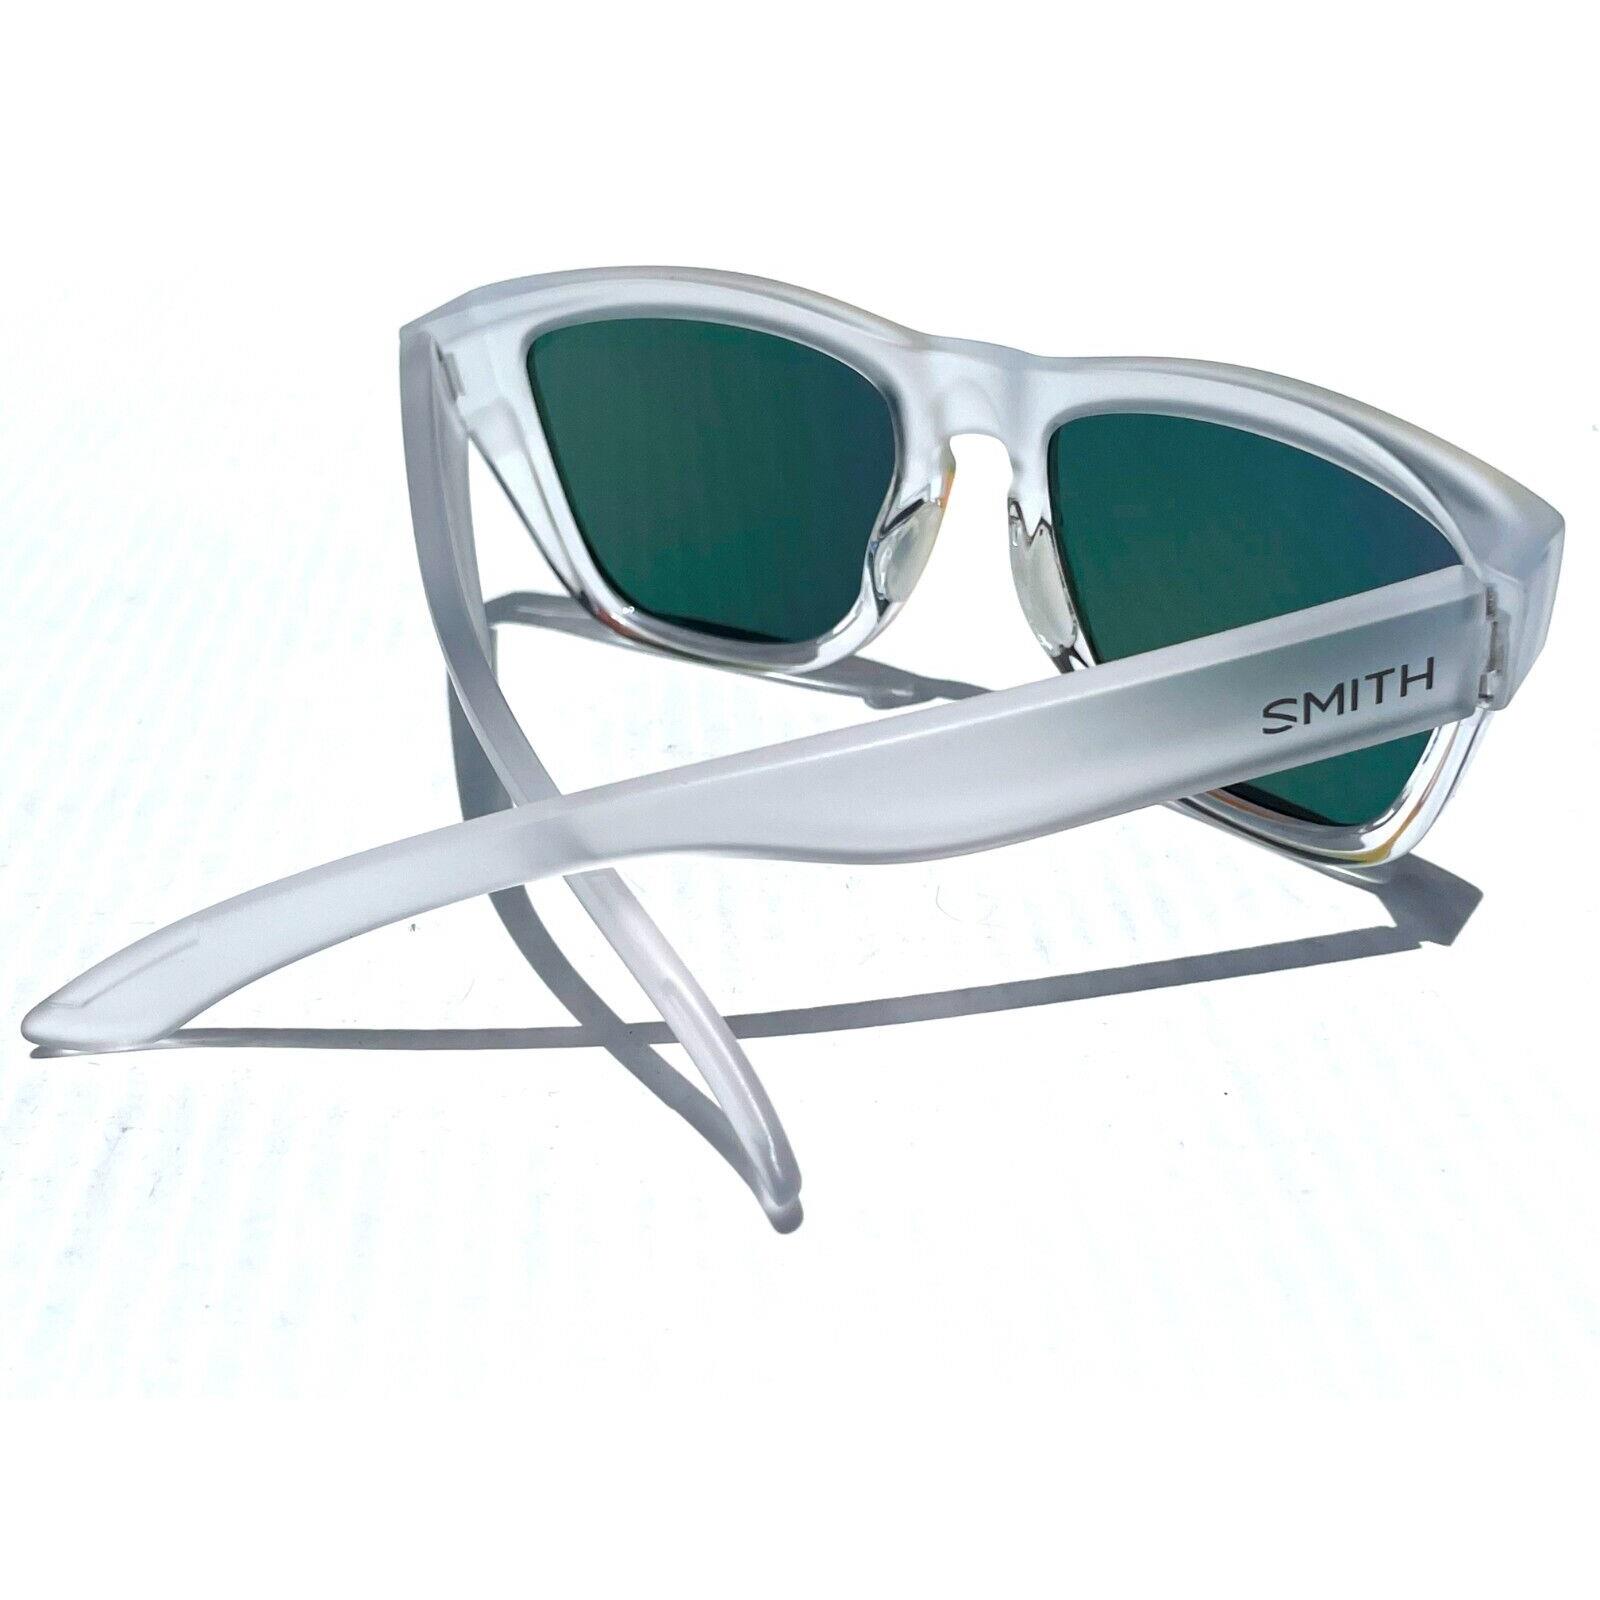 Smith Optics sunglasses Optic Clark - Matte Clear Frame, Red Lens 1